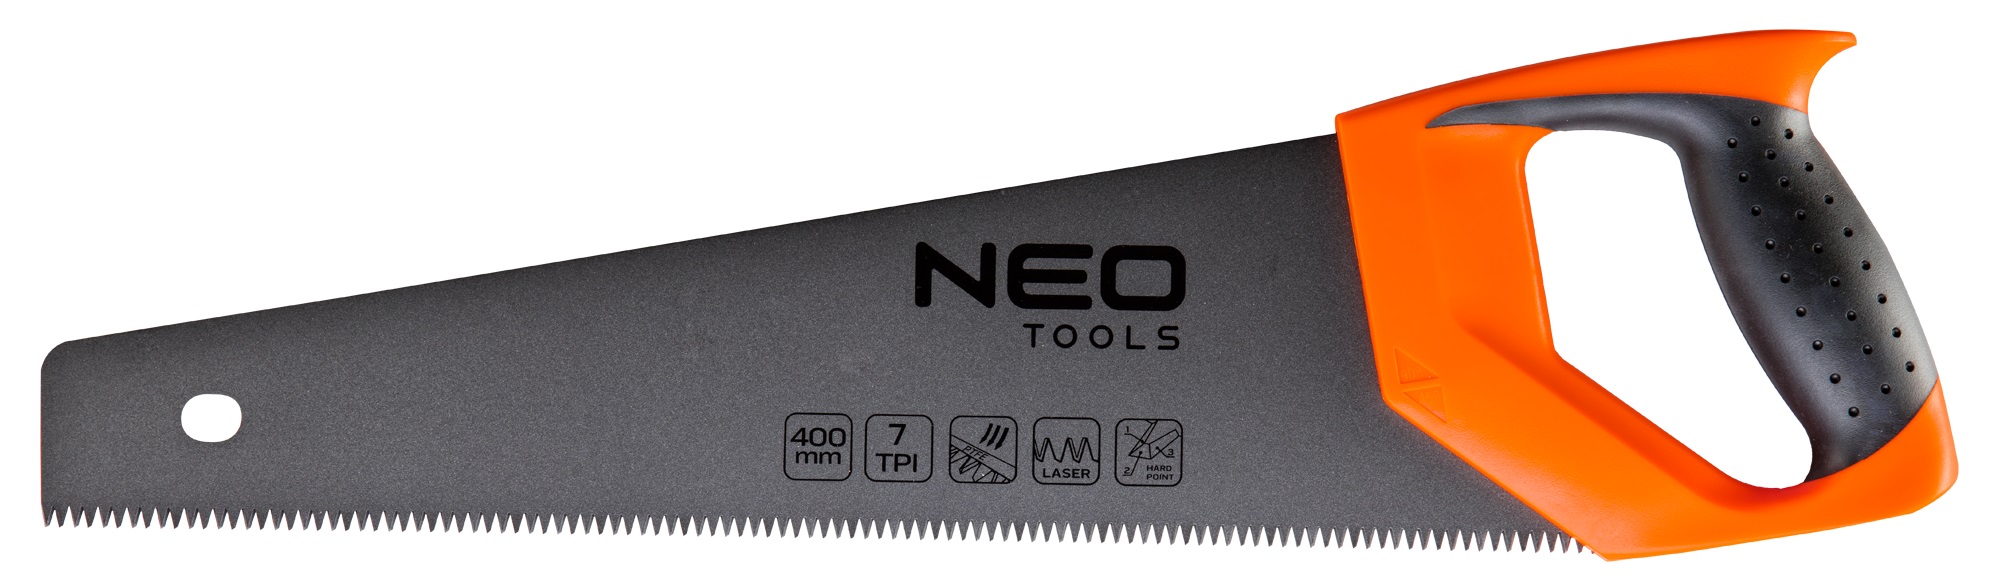 Ножівка по дереву Neo Tools 41-011 400 мм, 7TPI, PTFE (41-011) в інтернет-магазині, головне фото